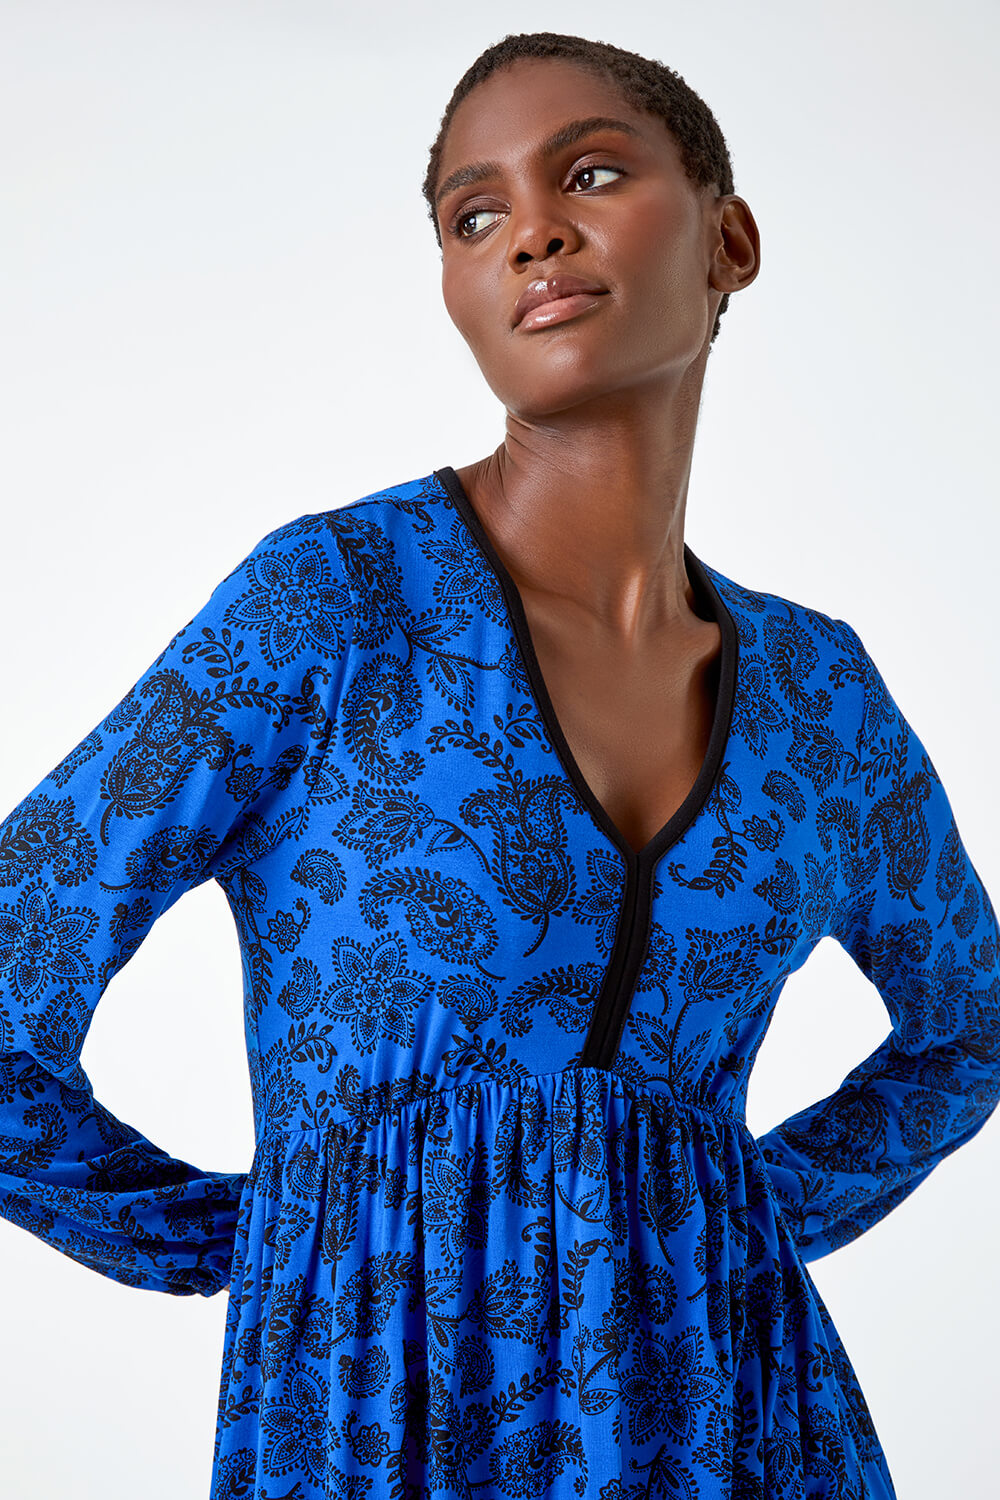 Royal Blue Floral Print Stretch Jersey Dress, Image 4 of 5